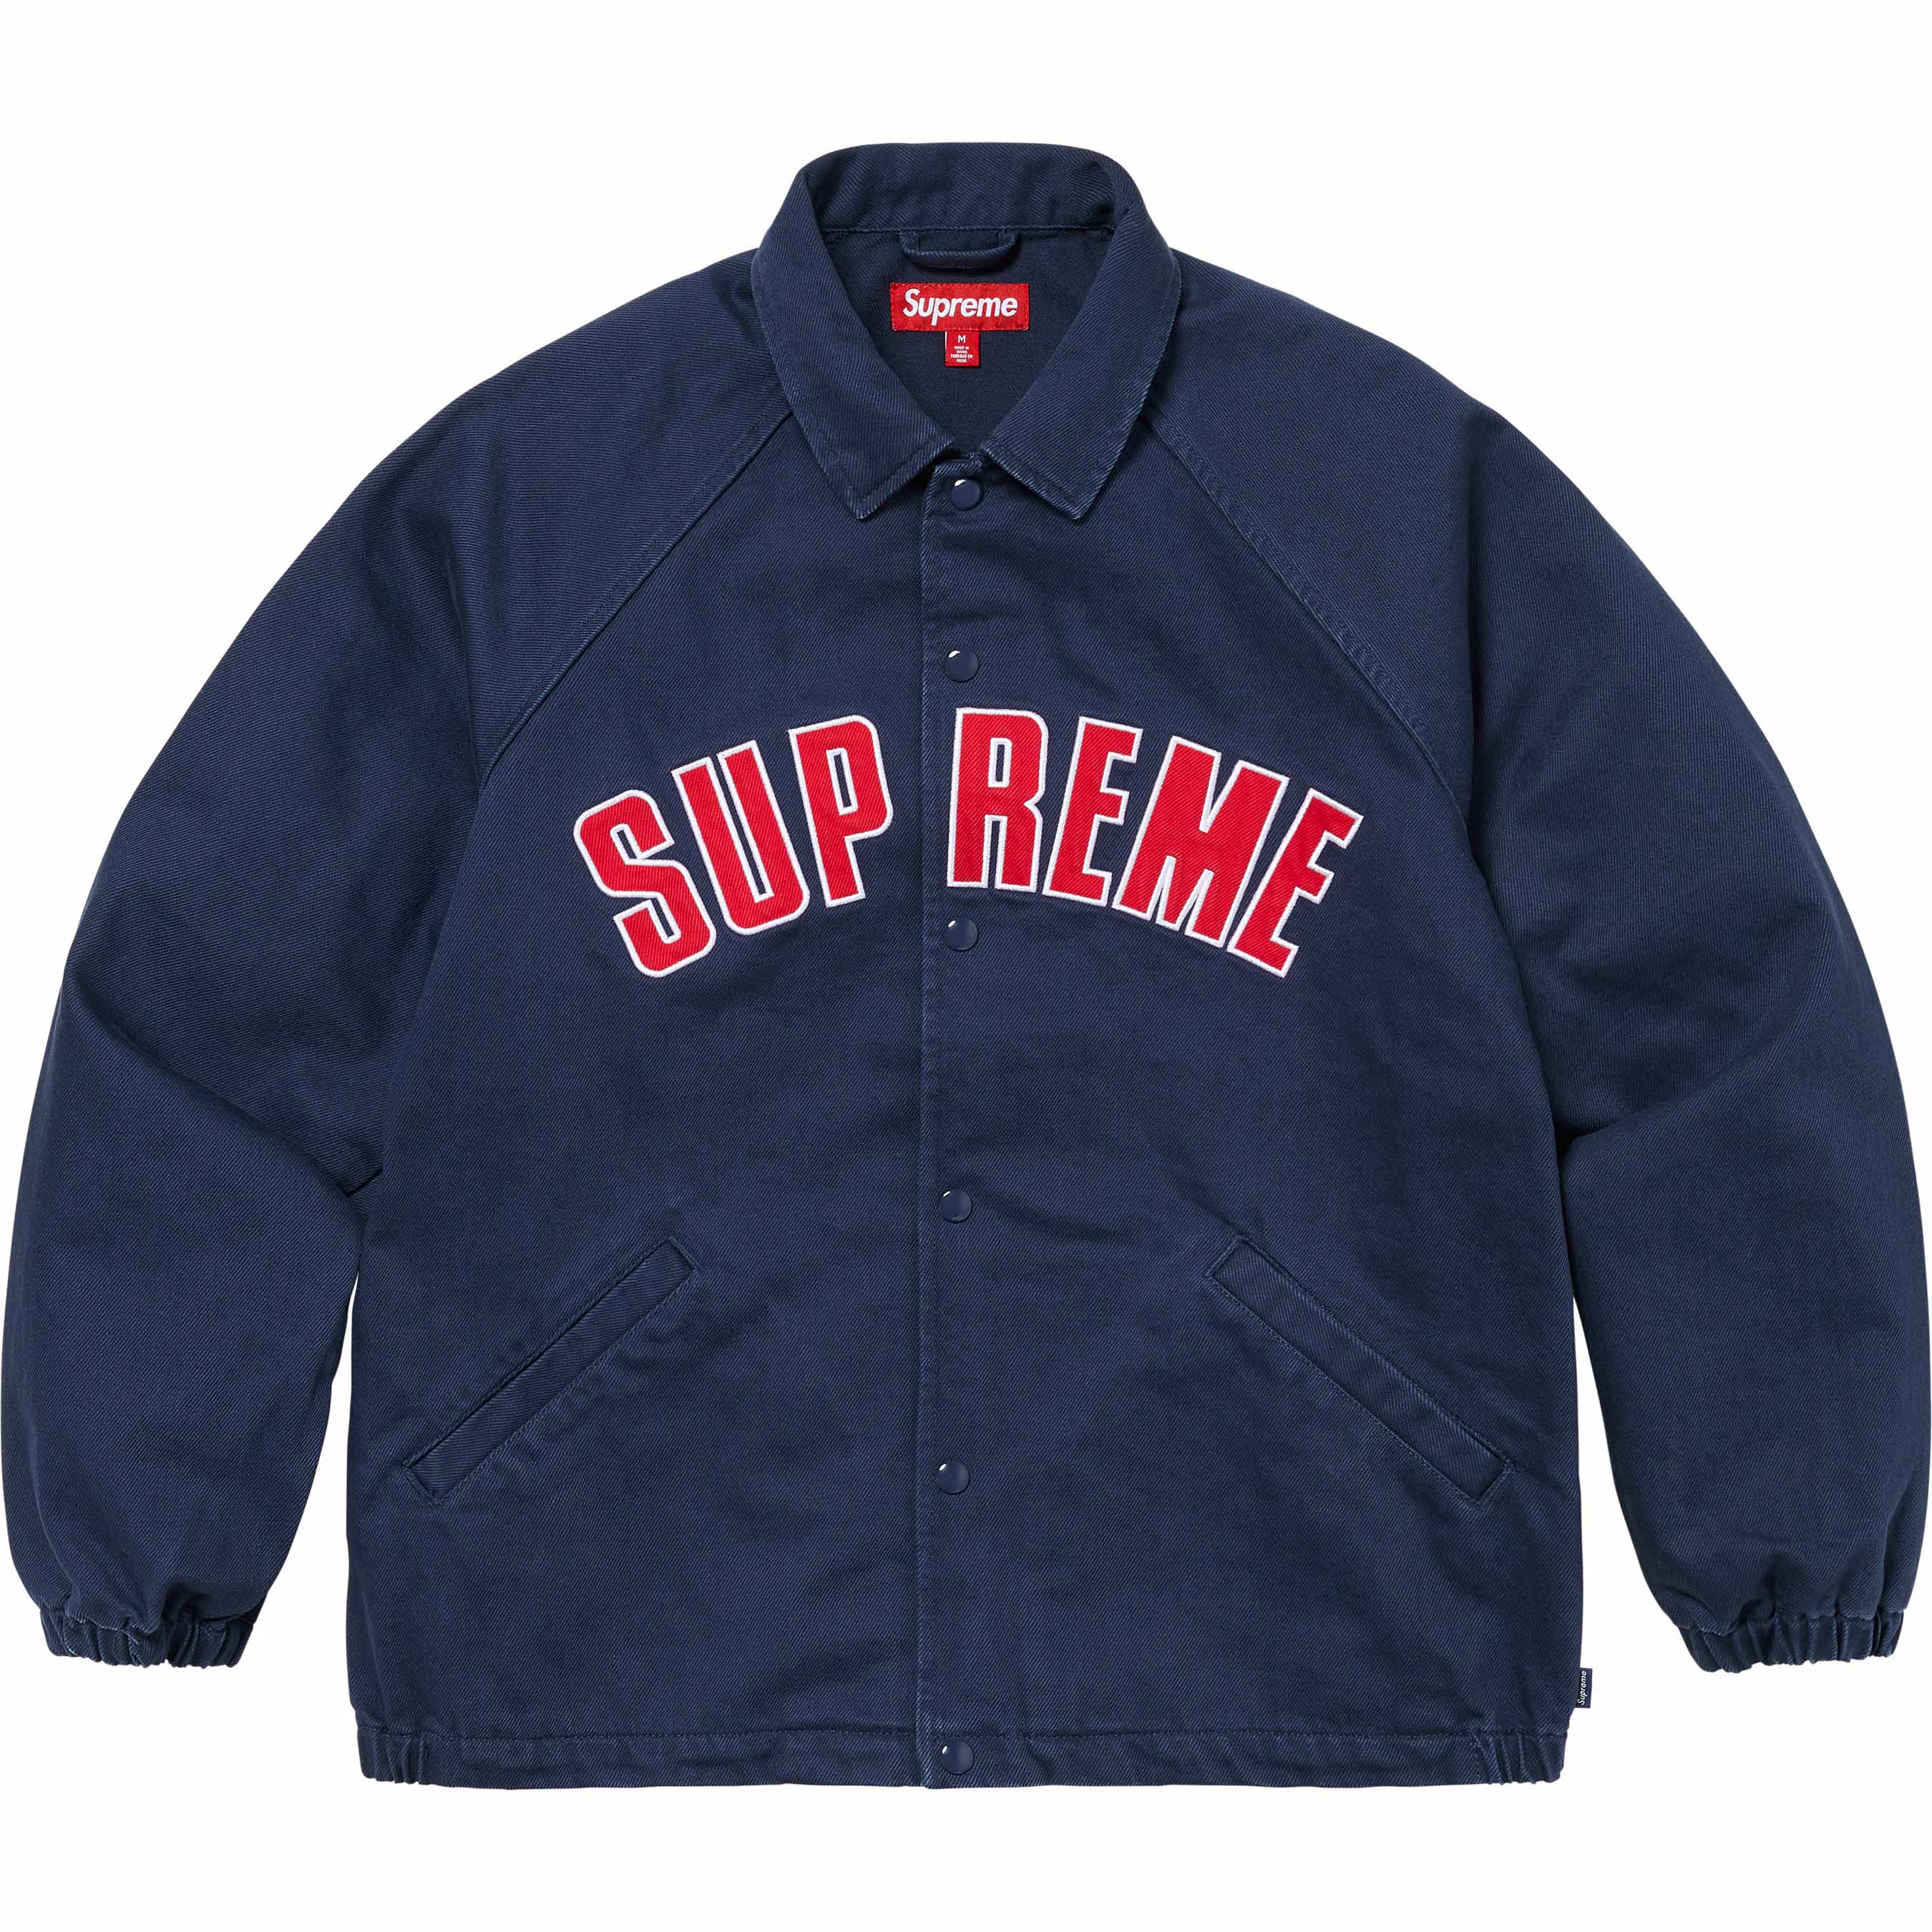 Supreme Snap Front Twill Jacket arc logoコレクション整理のため出品です